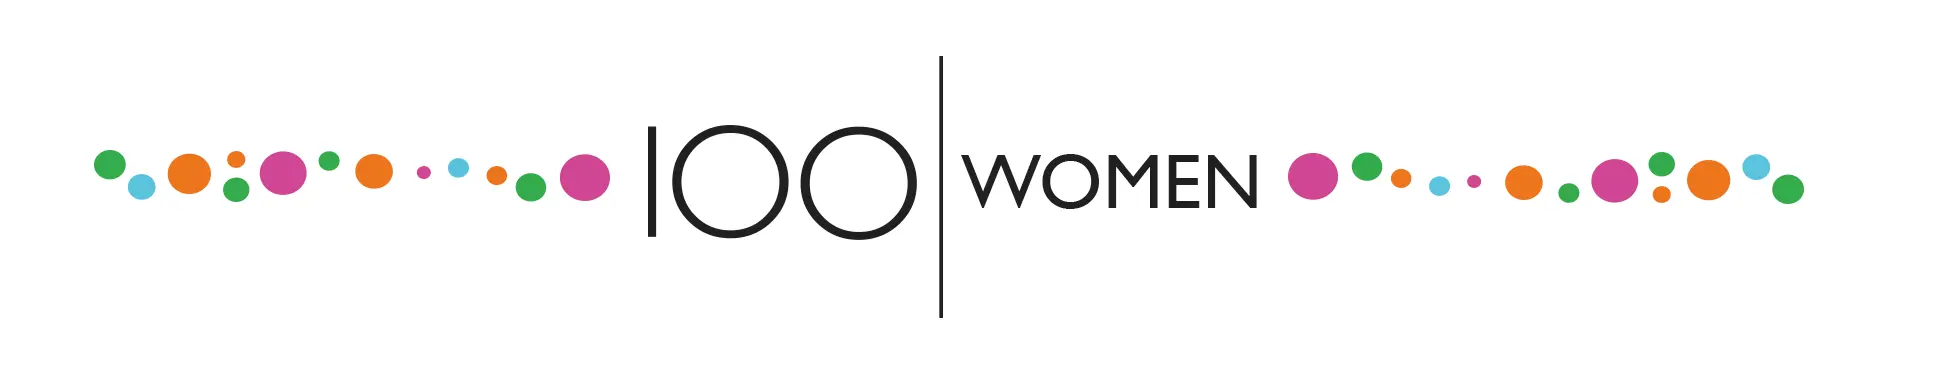 SOMA Celebrates Women's History Month 2021: 'Women Lifting Women' - The  Village Green